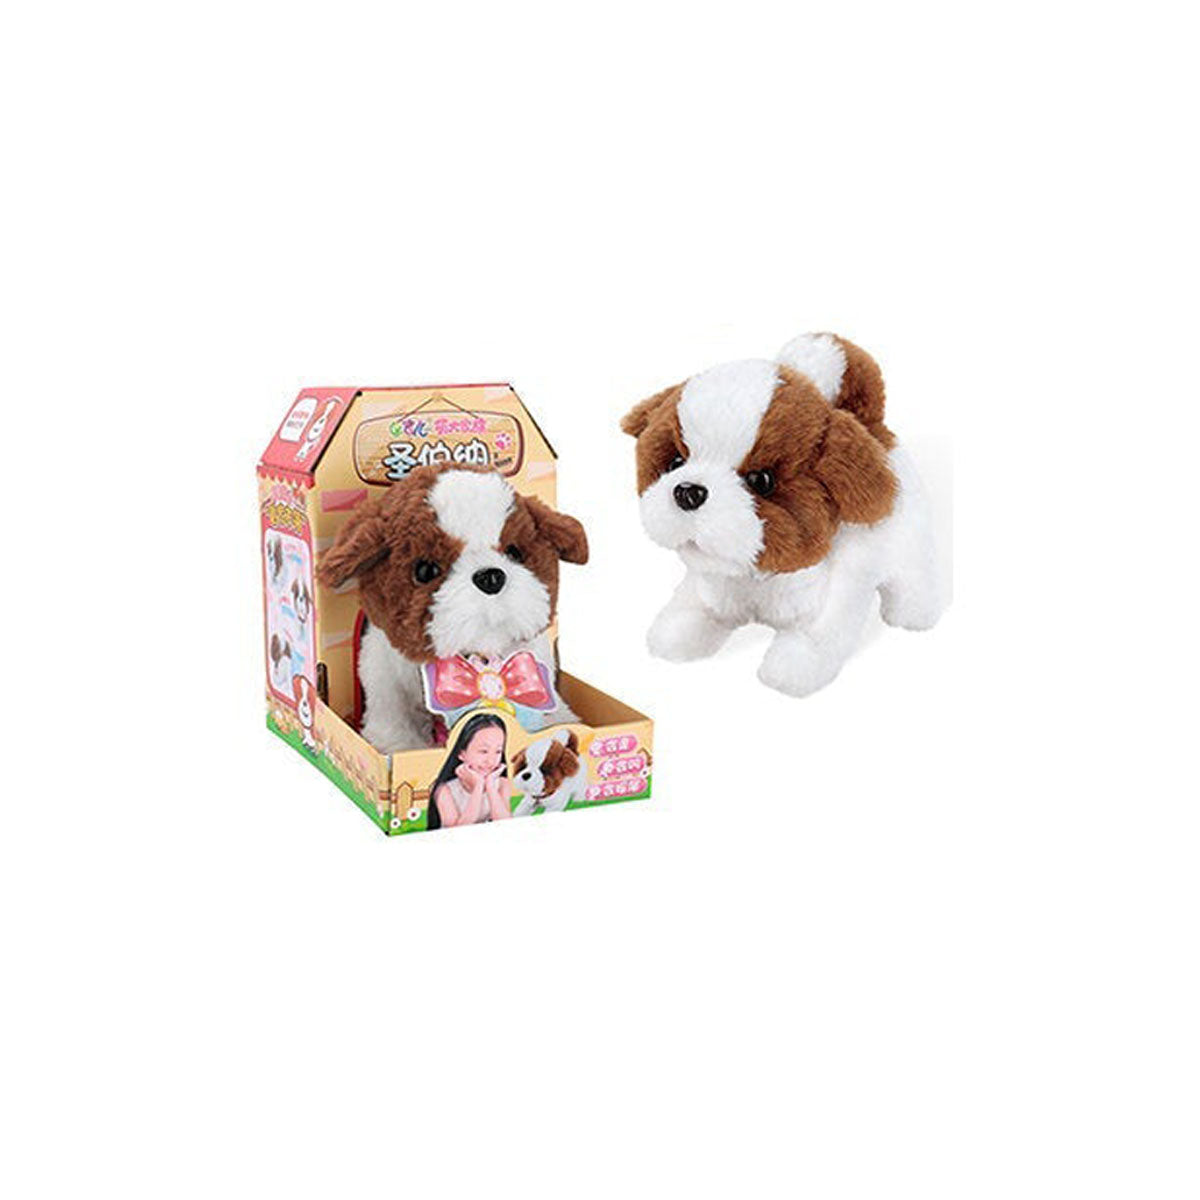 Cute Electronic Plush Stuffed Walking Tail Shaking Barking Pet Dog Toy for Kids Developmental